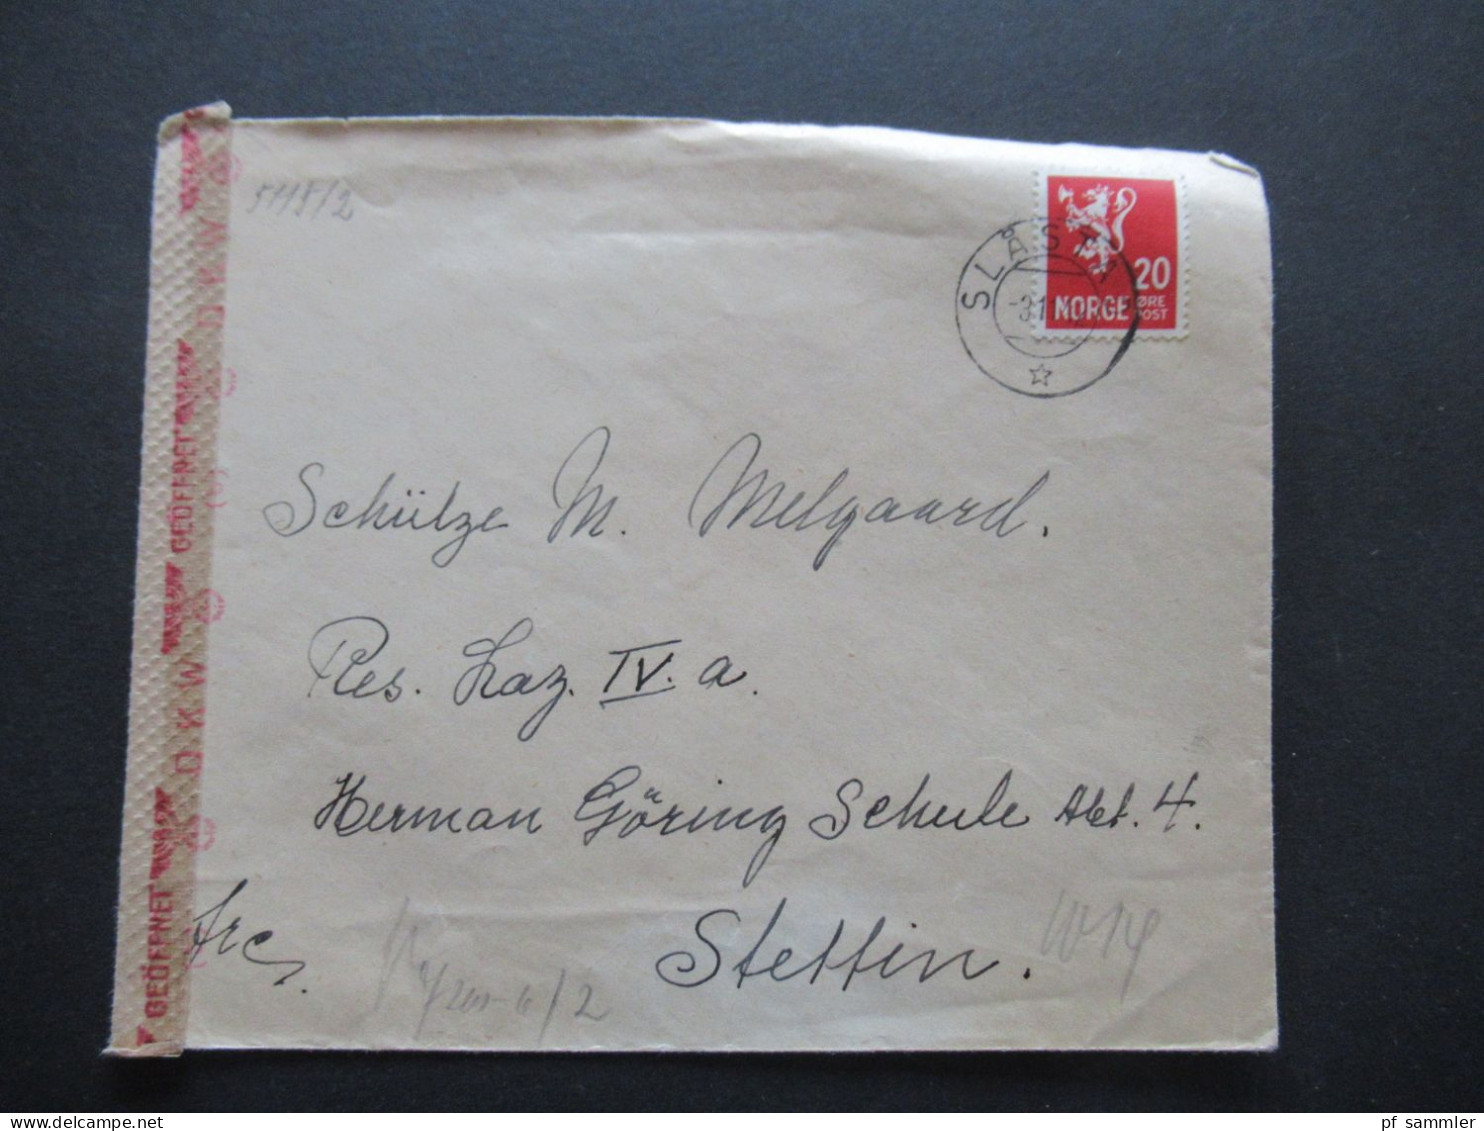 Norwegen 1942 POW Kriegsgefangenenpost Zensurstreifen OKW Zensur Skarnes - Res.Lazarett IV Stettin Hermann Göring Schule - Covers & Documents